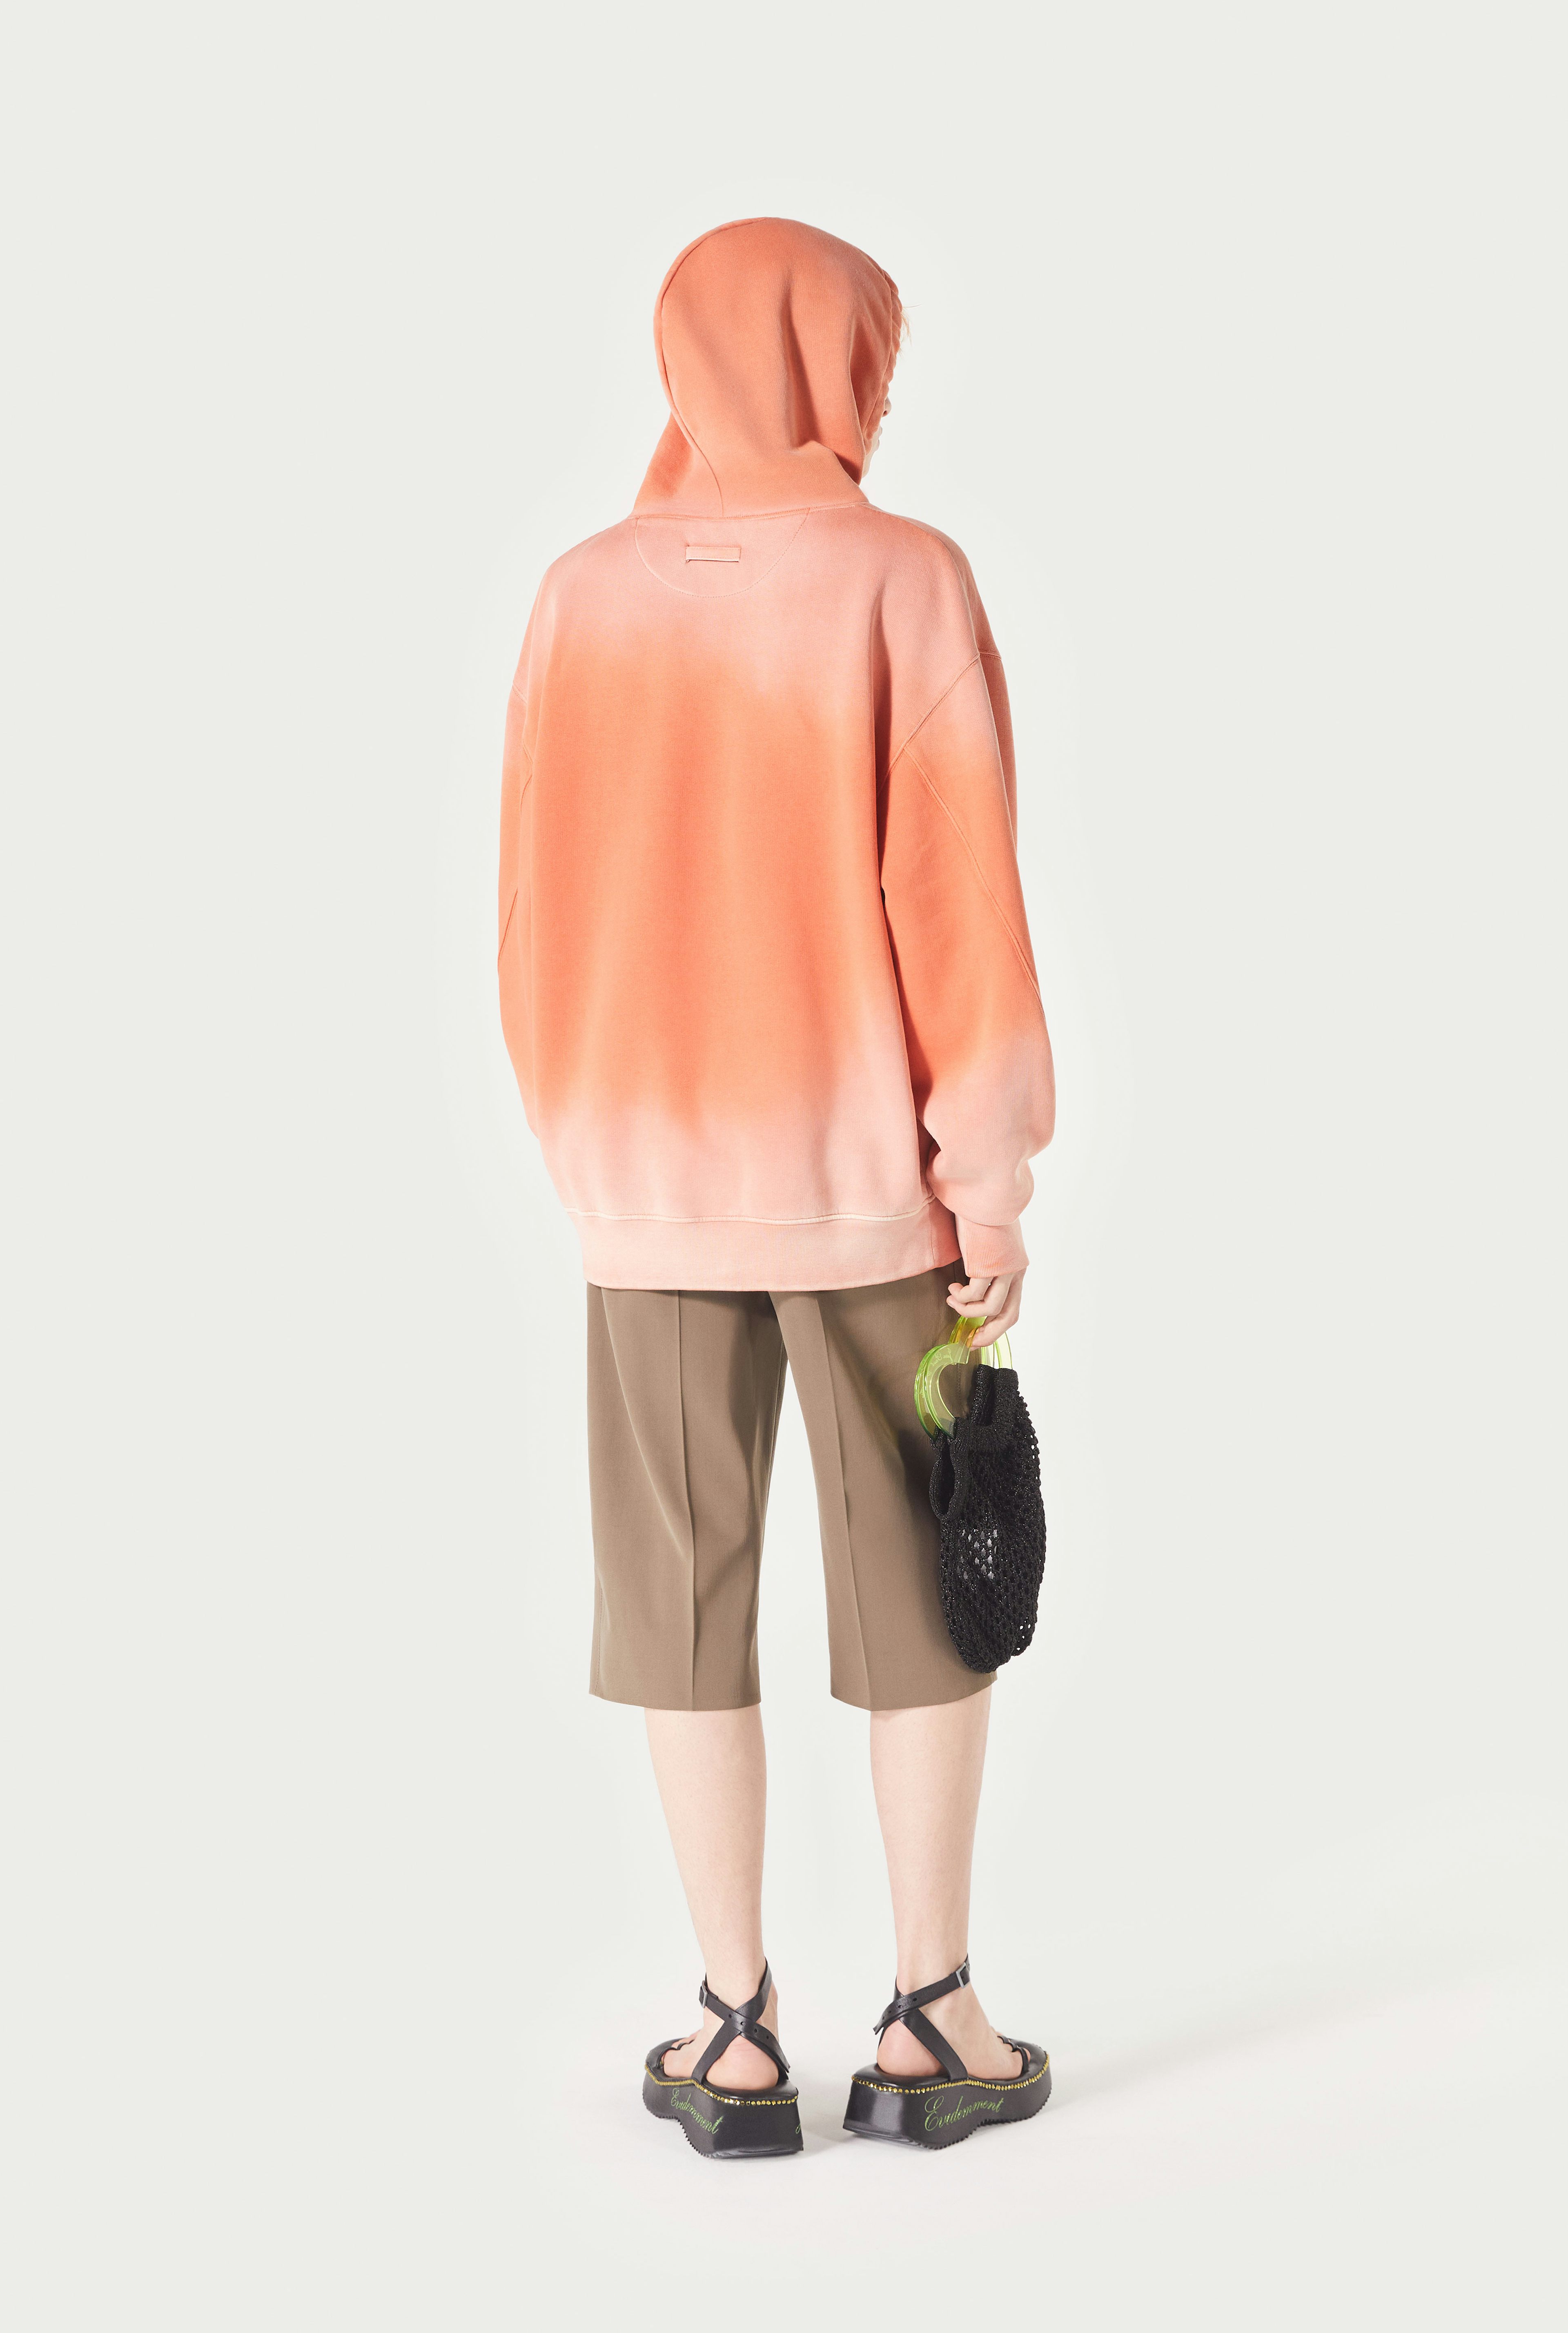 The Orange Hooded Évidemment Sweatshirt Jean Paul Gaultier